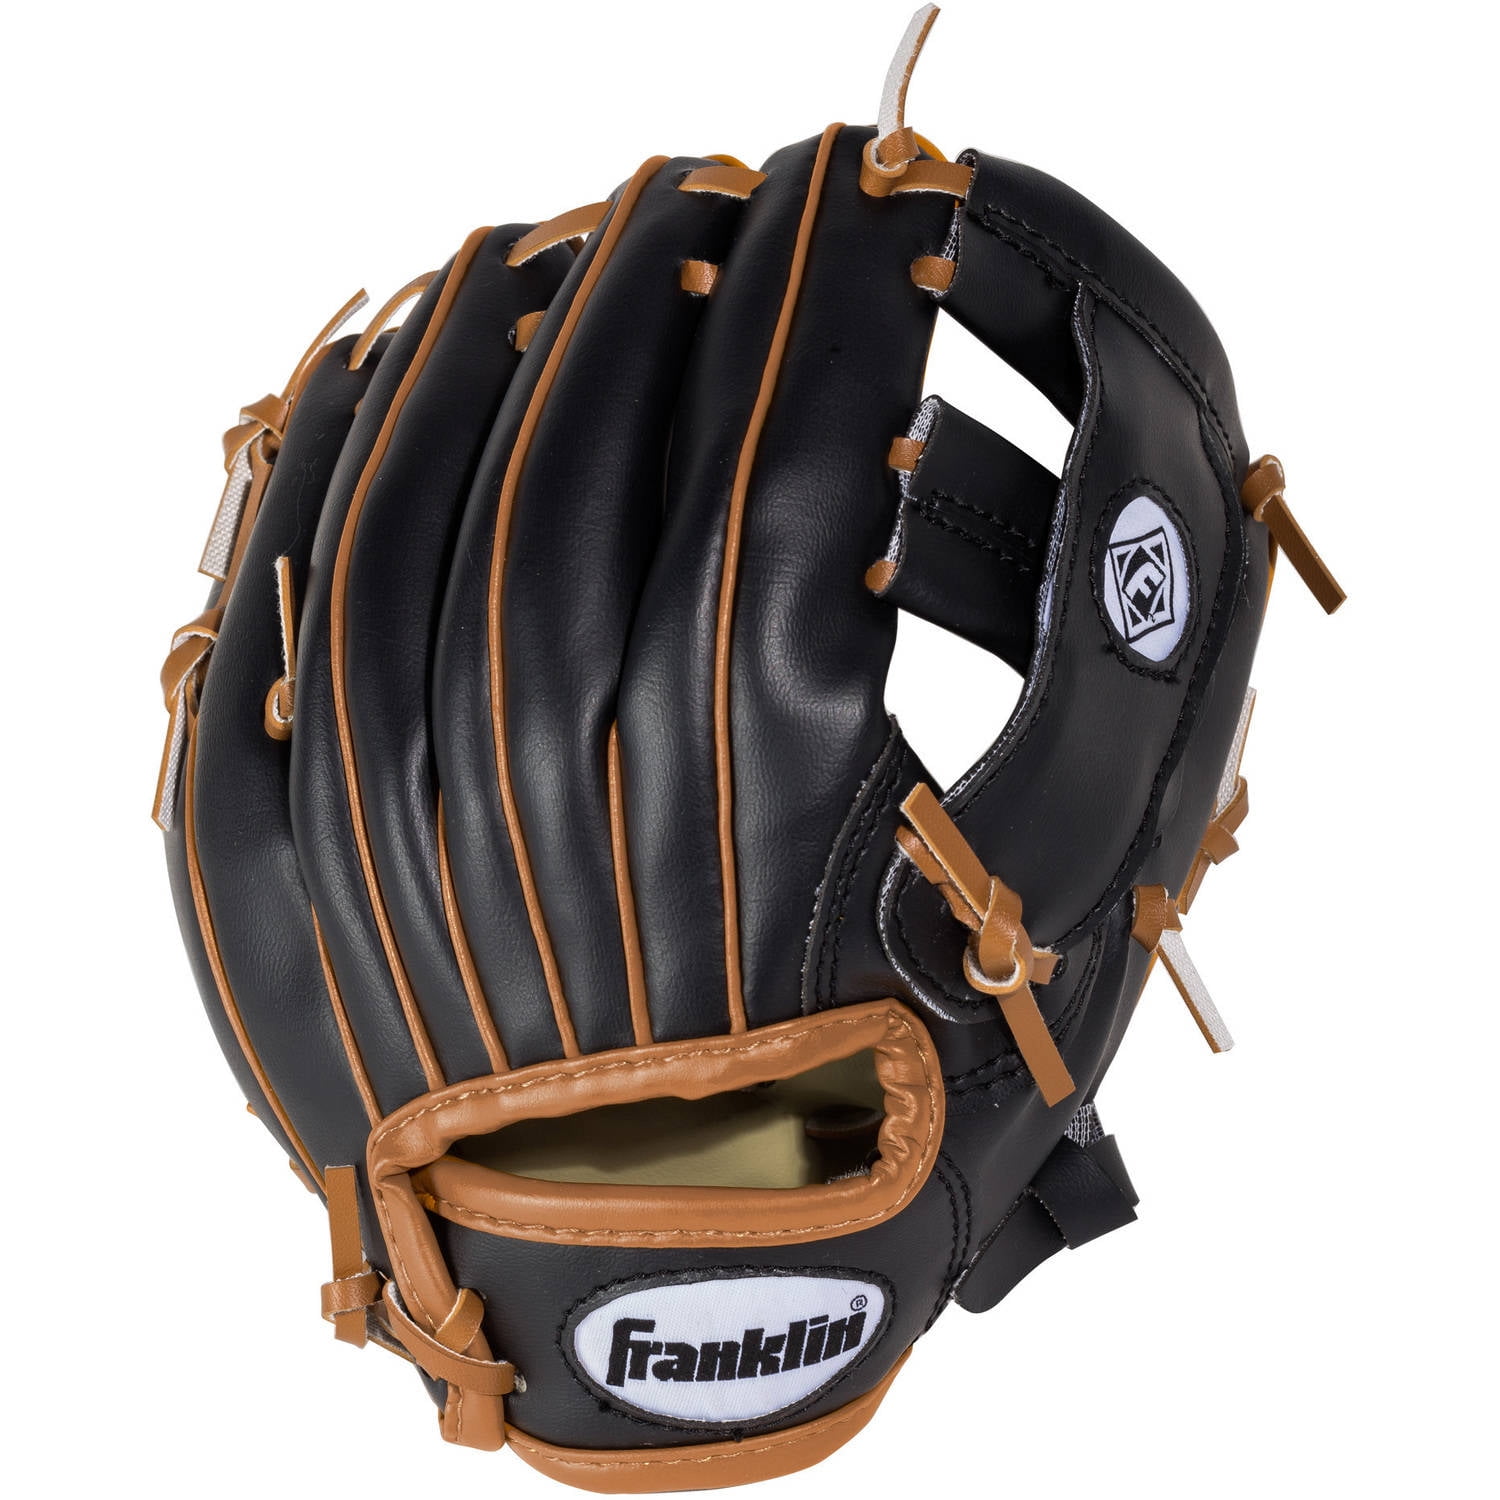 8.5" Leather Baseball Glove Teeball Sports Game Performance Right Hand Throw New 